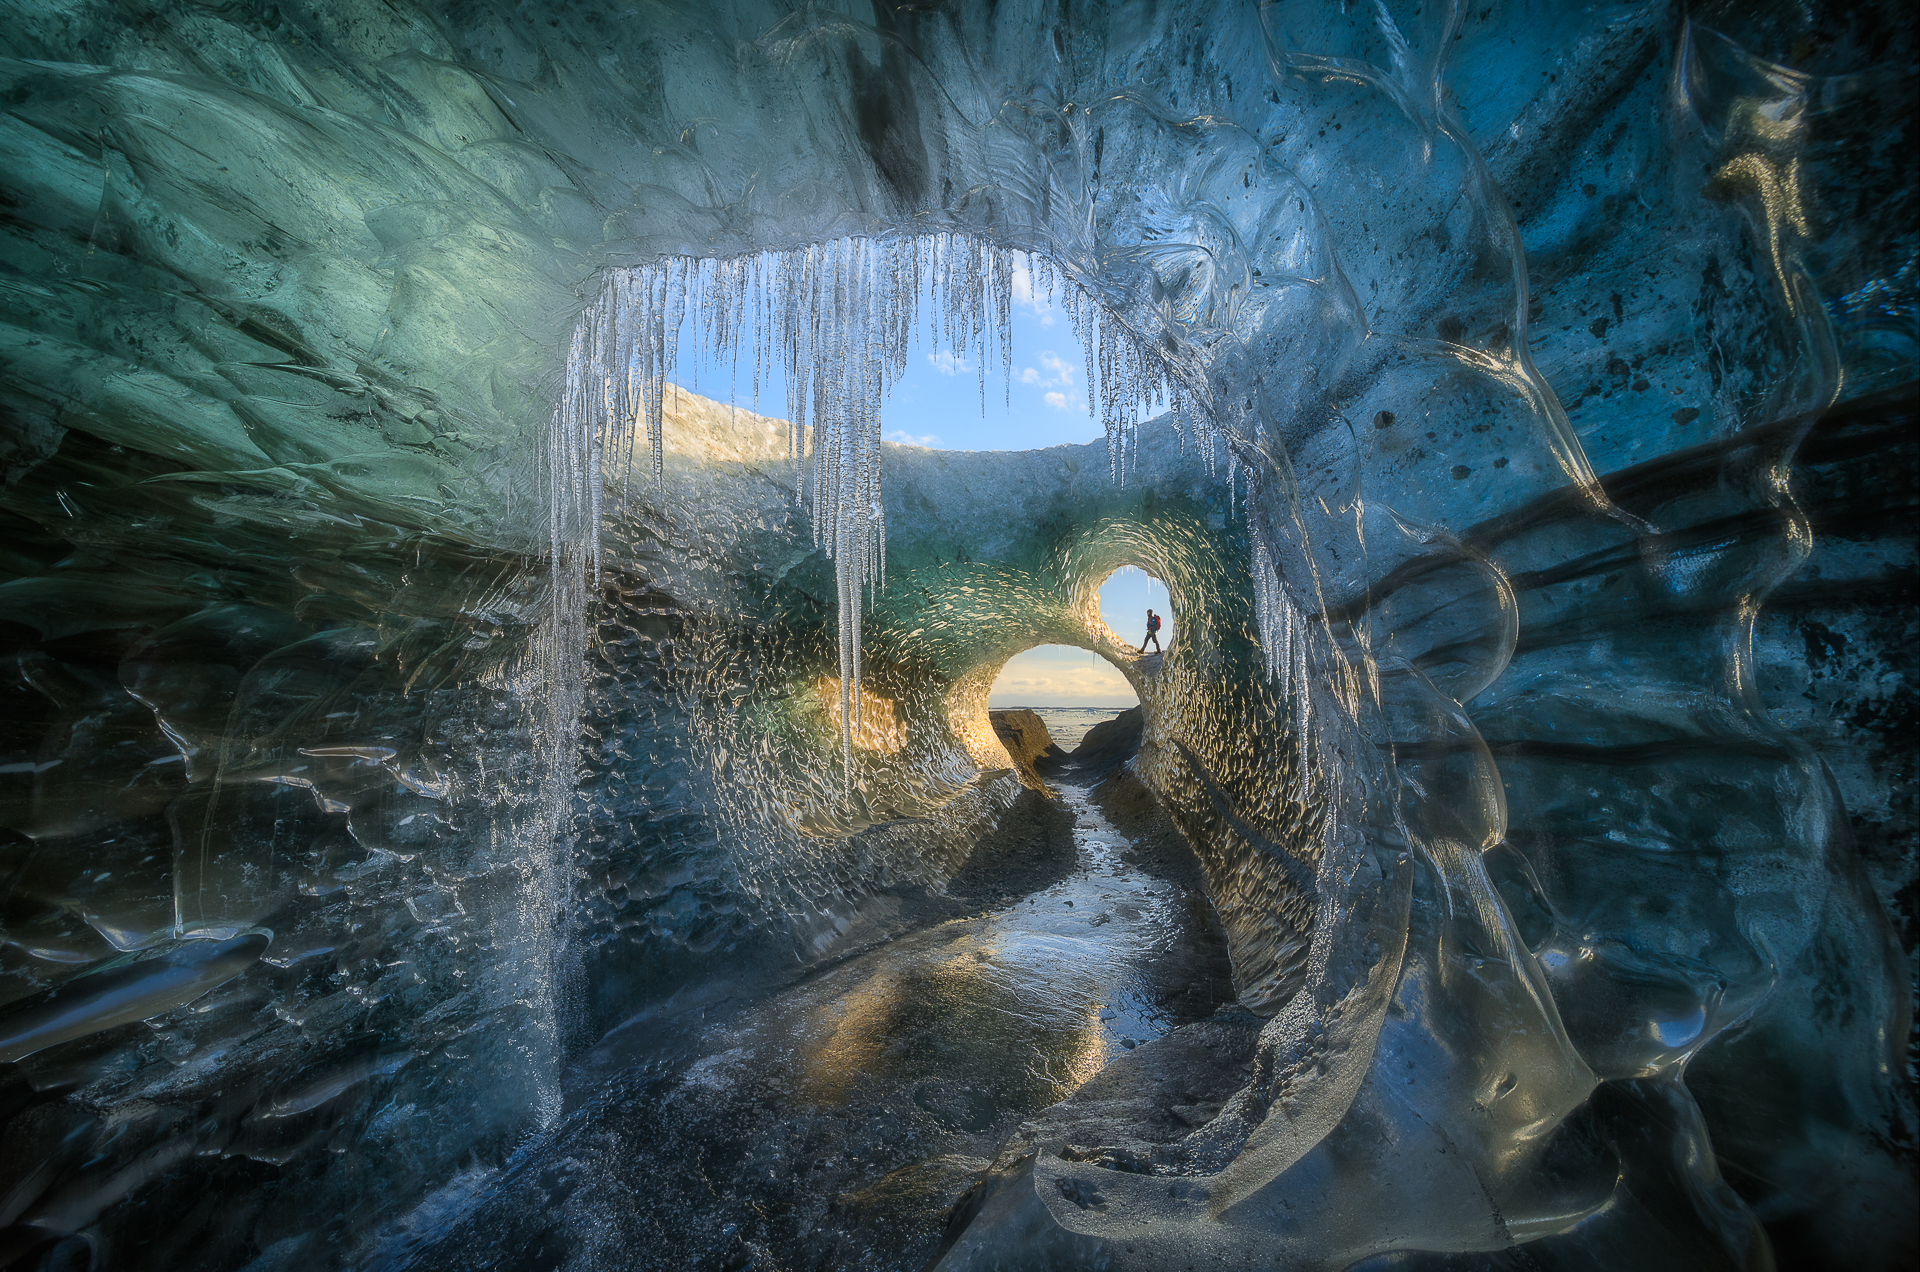 Una visita a una grotta di ghiaccio blu ultraterrena è qualcosa che ricorderai per sempre.